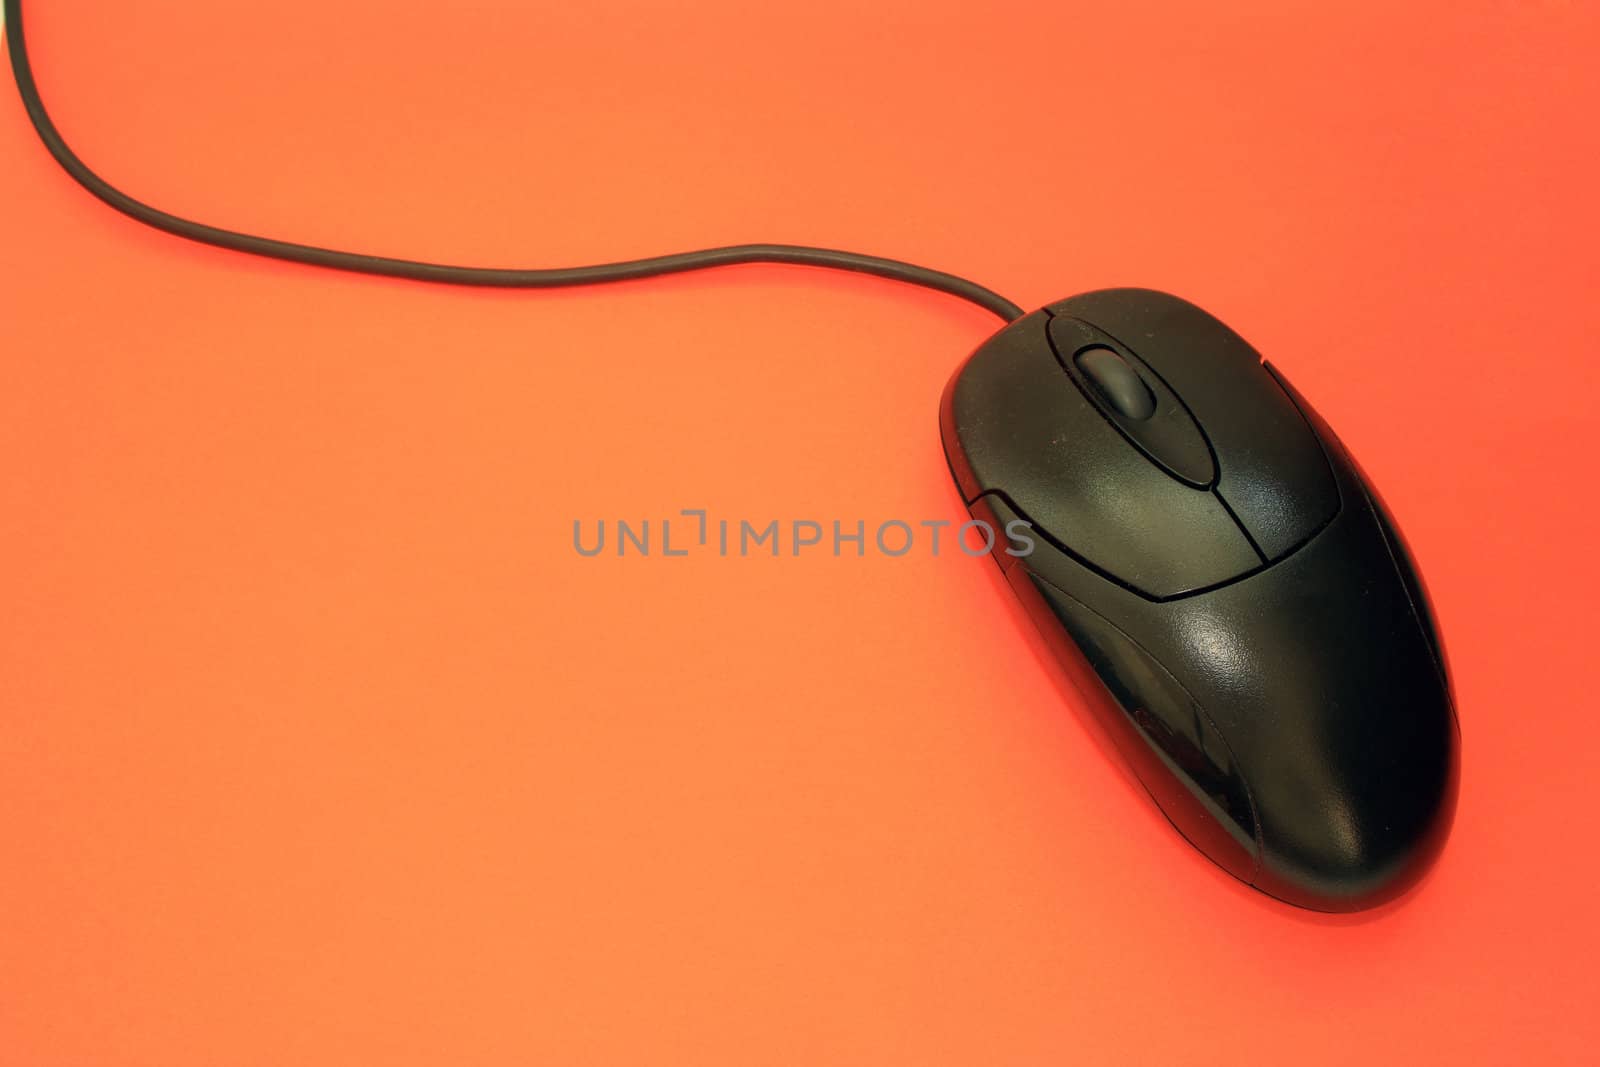 A mouse on orange background